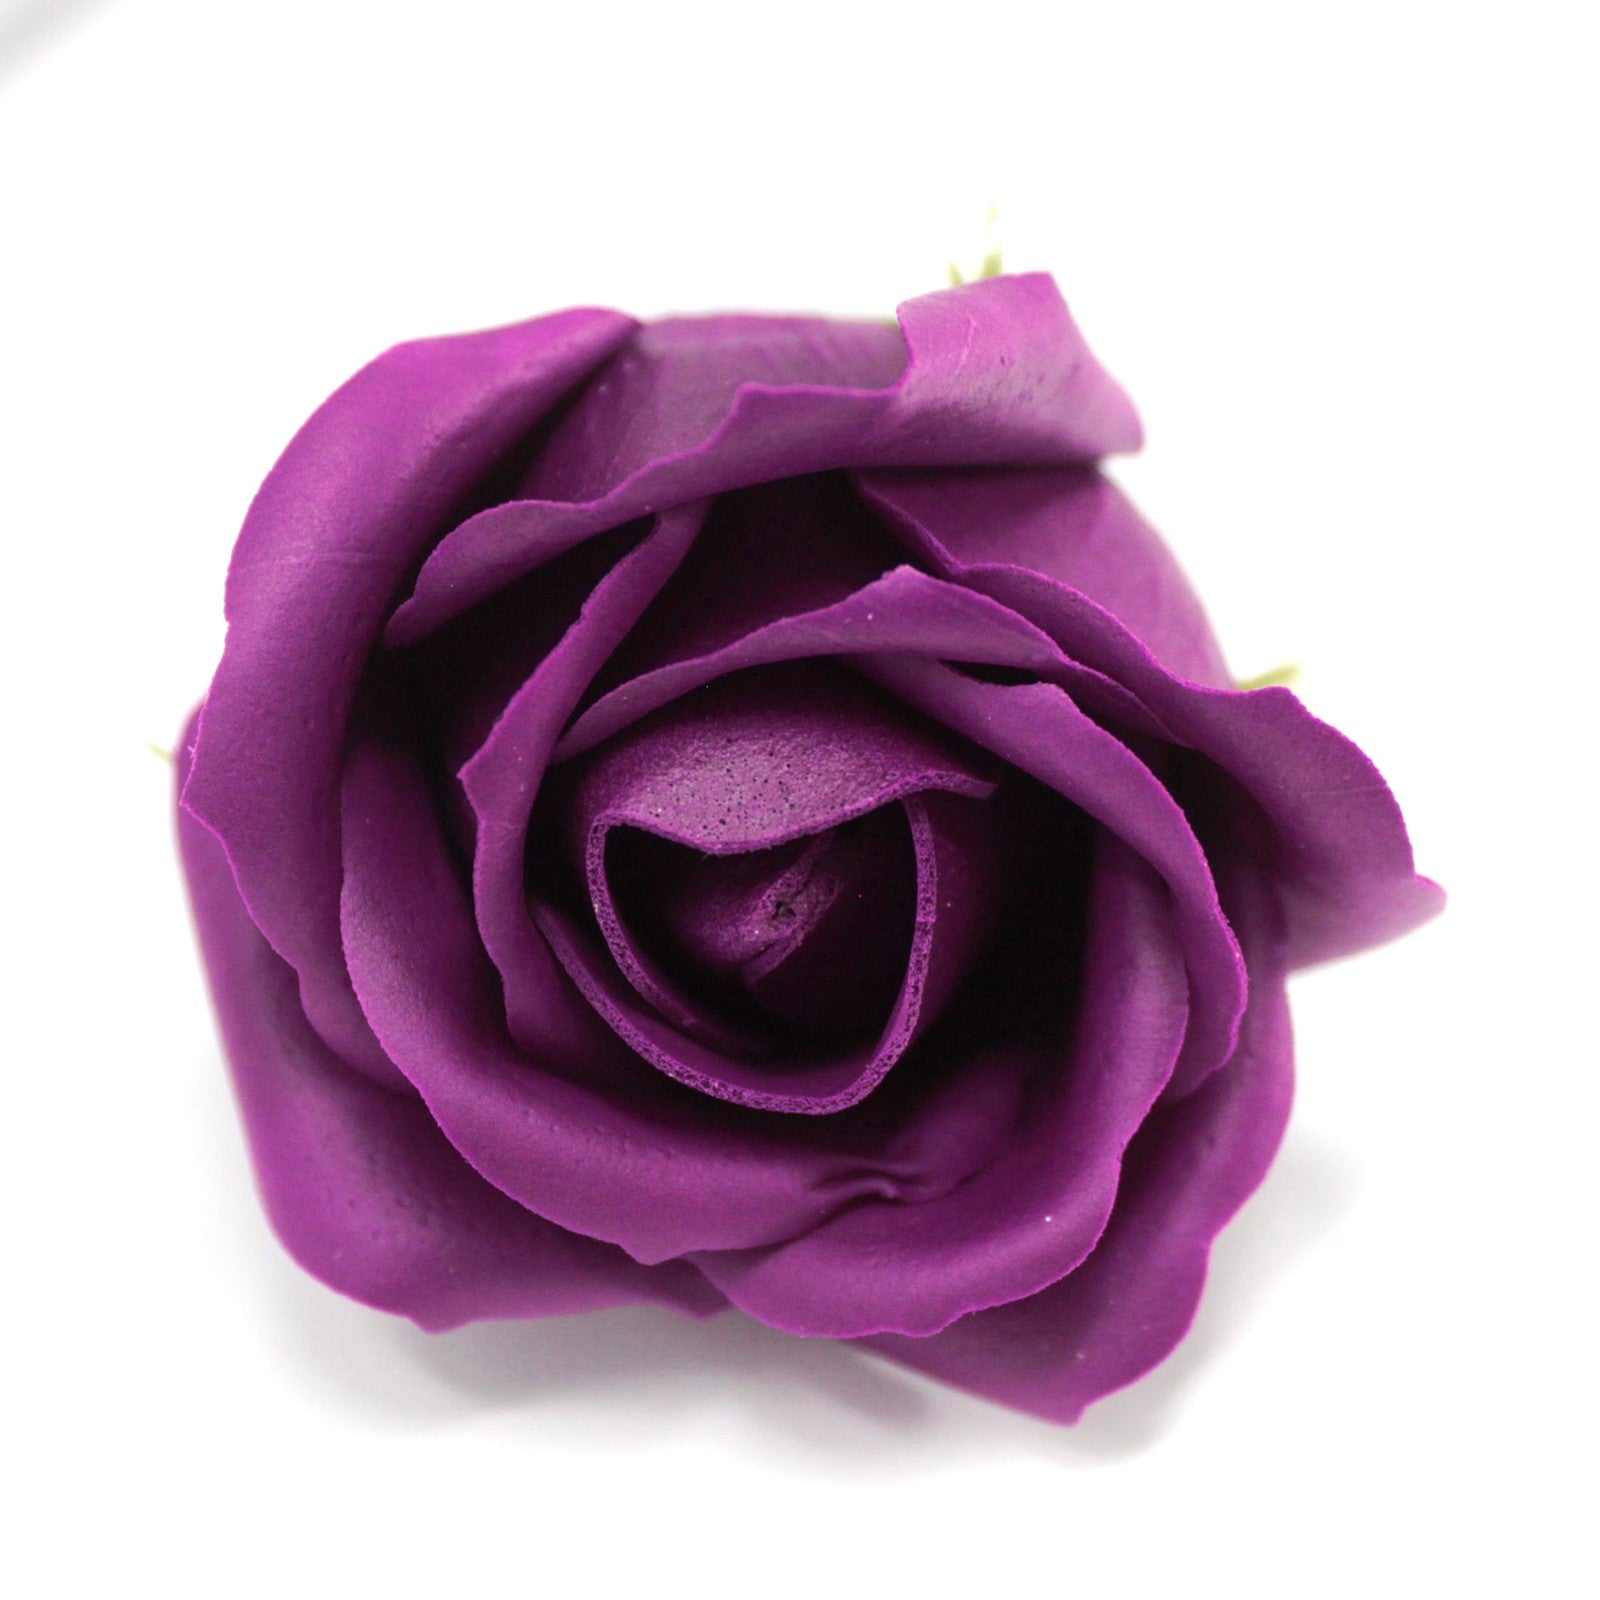 View Craft Soap Flowers Med Rose Deep Violet x 10 pcs information